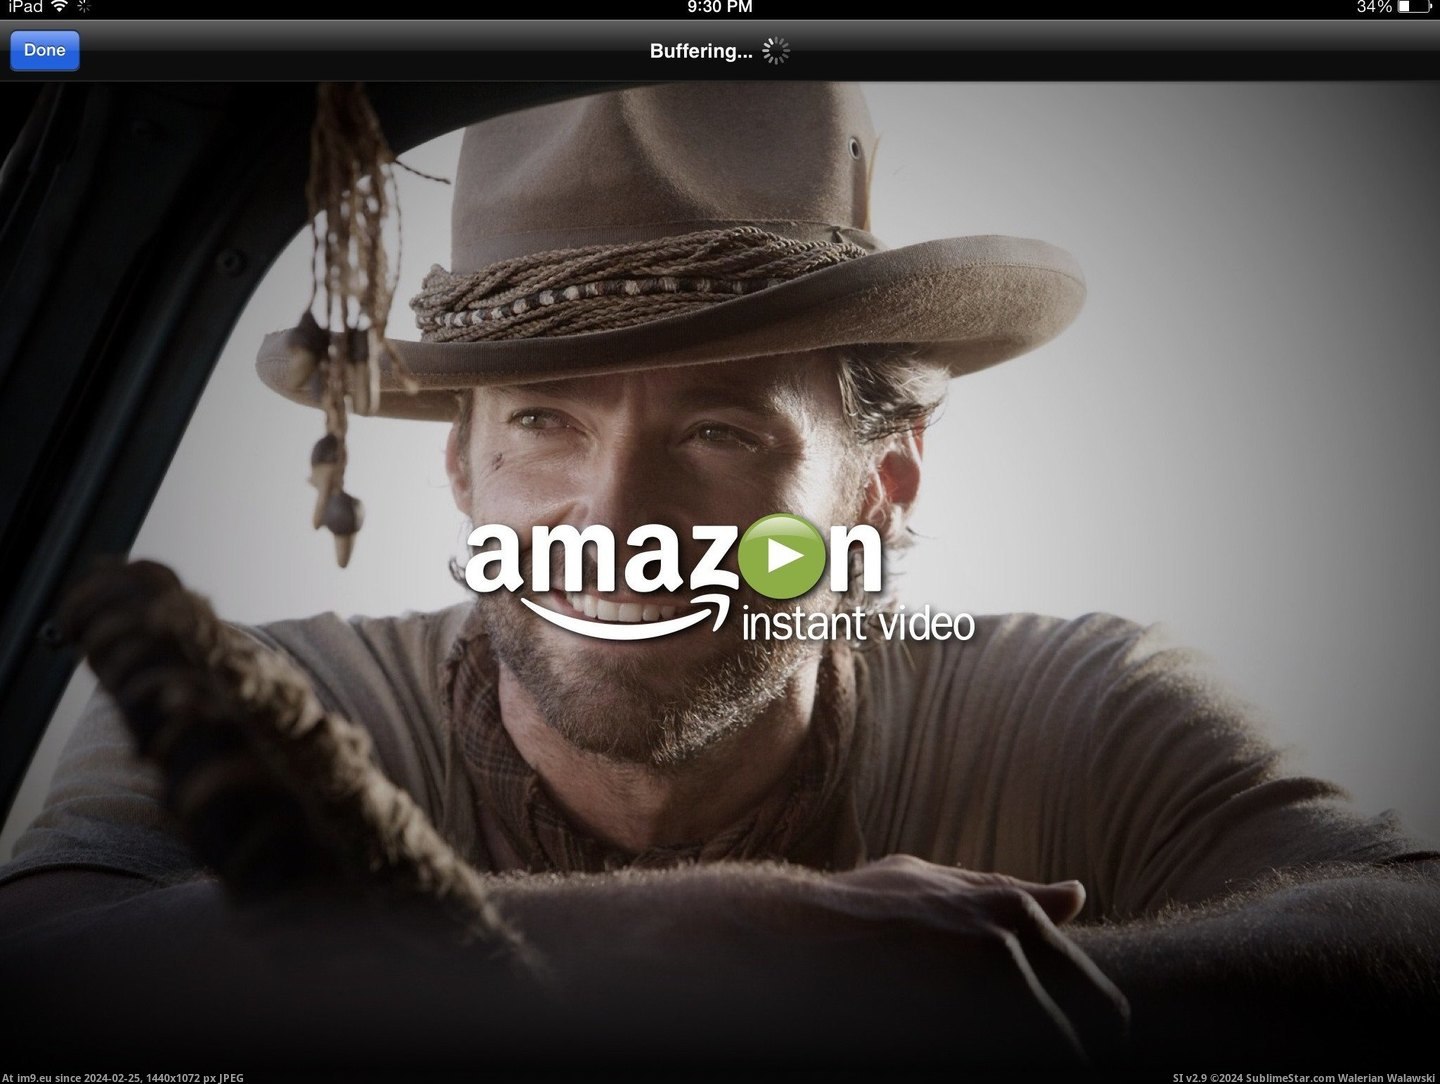 #Smile #Amazon #Jackman #Overlapped #Hugh #Loading [Mildlyinteresting] The Amazon 'smile' overlapped with Hugh Jackman's smile when loading Pic. (Bild von album My r/MILDLYINTERESTING favs))